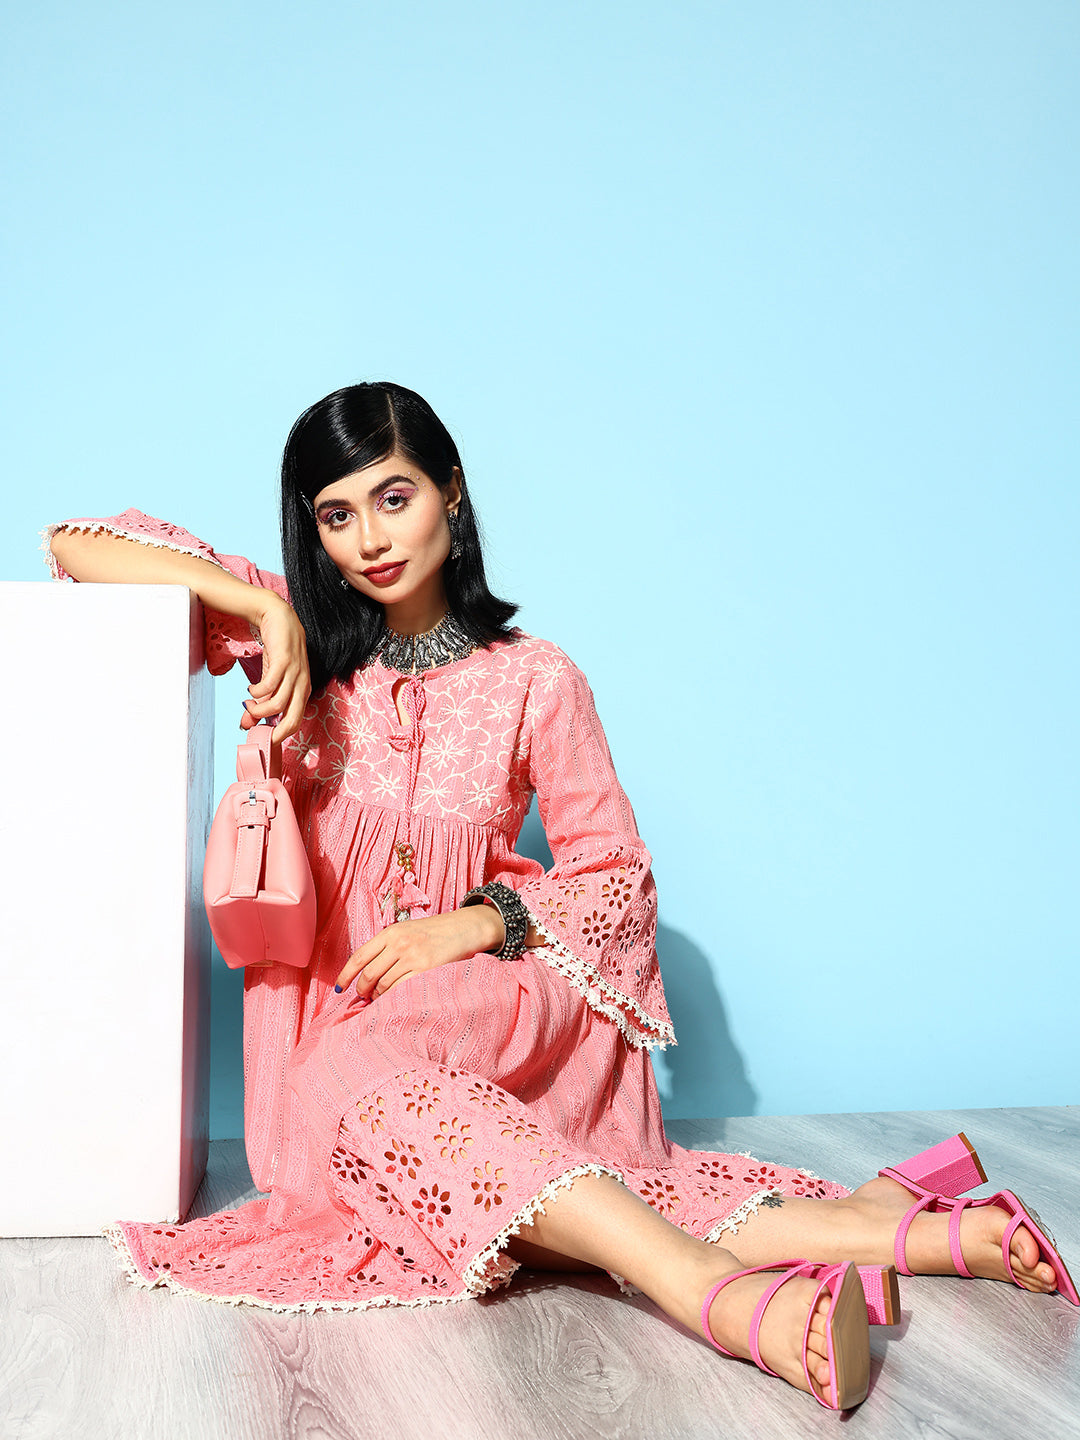 Ishin Women's Cotton Pink Schiffli Embroidered A-Line Dress